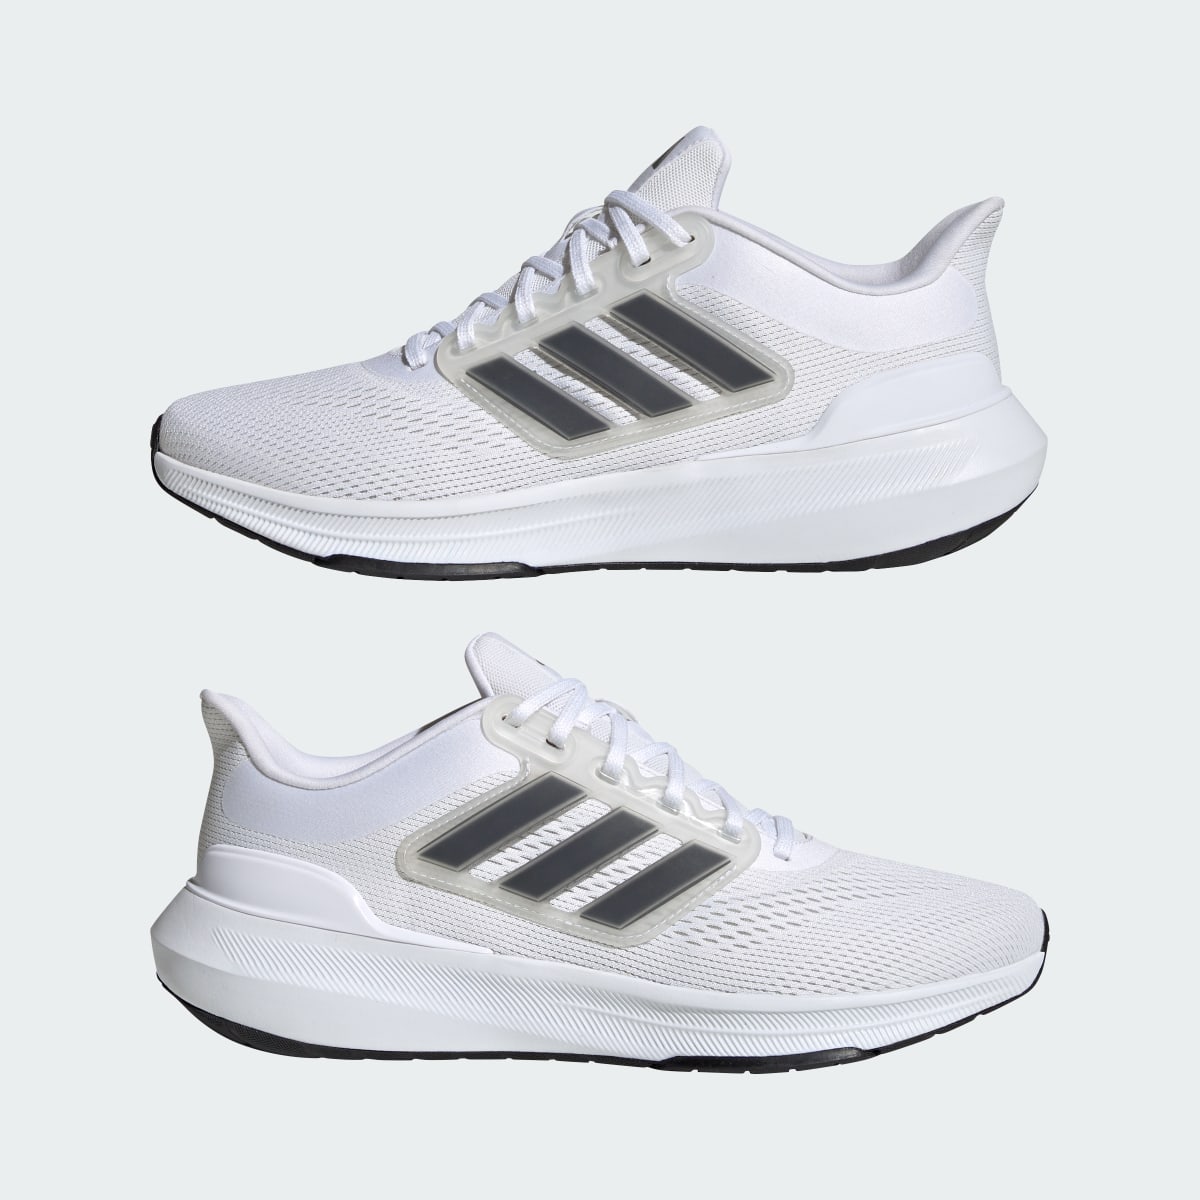 Adidas Ultrabounce Running Shoes. 8